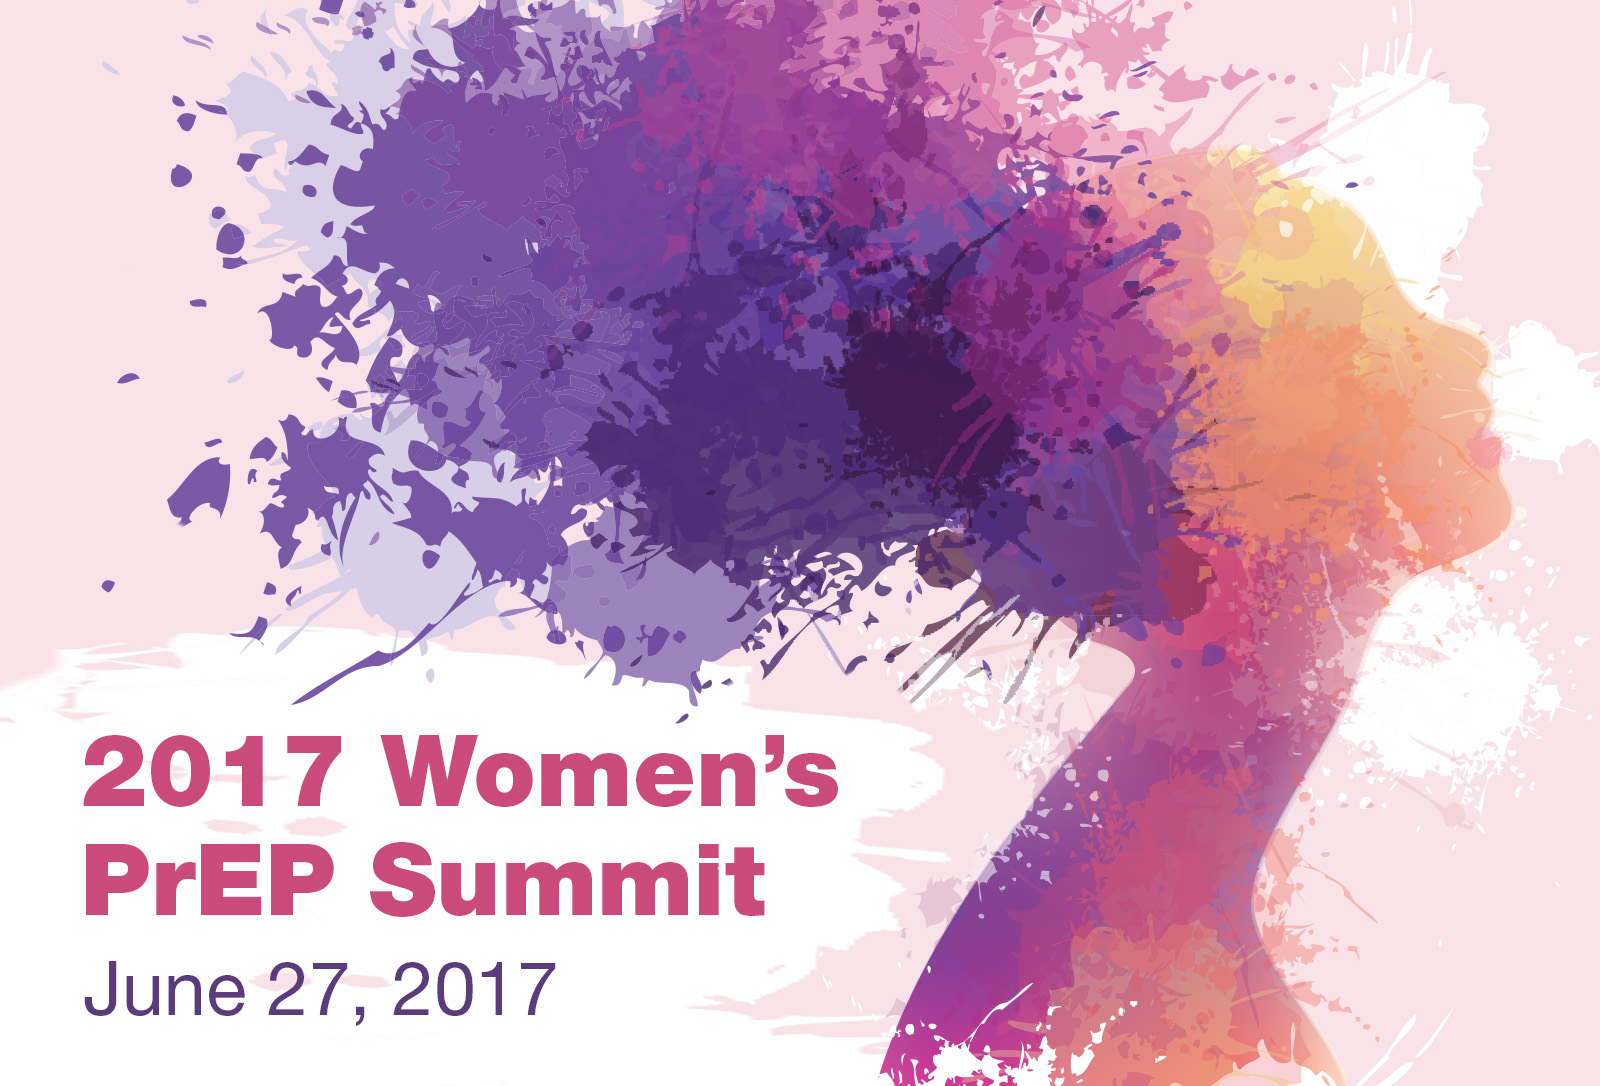 Women's PrEP Summit June 27, 2017